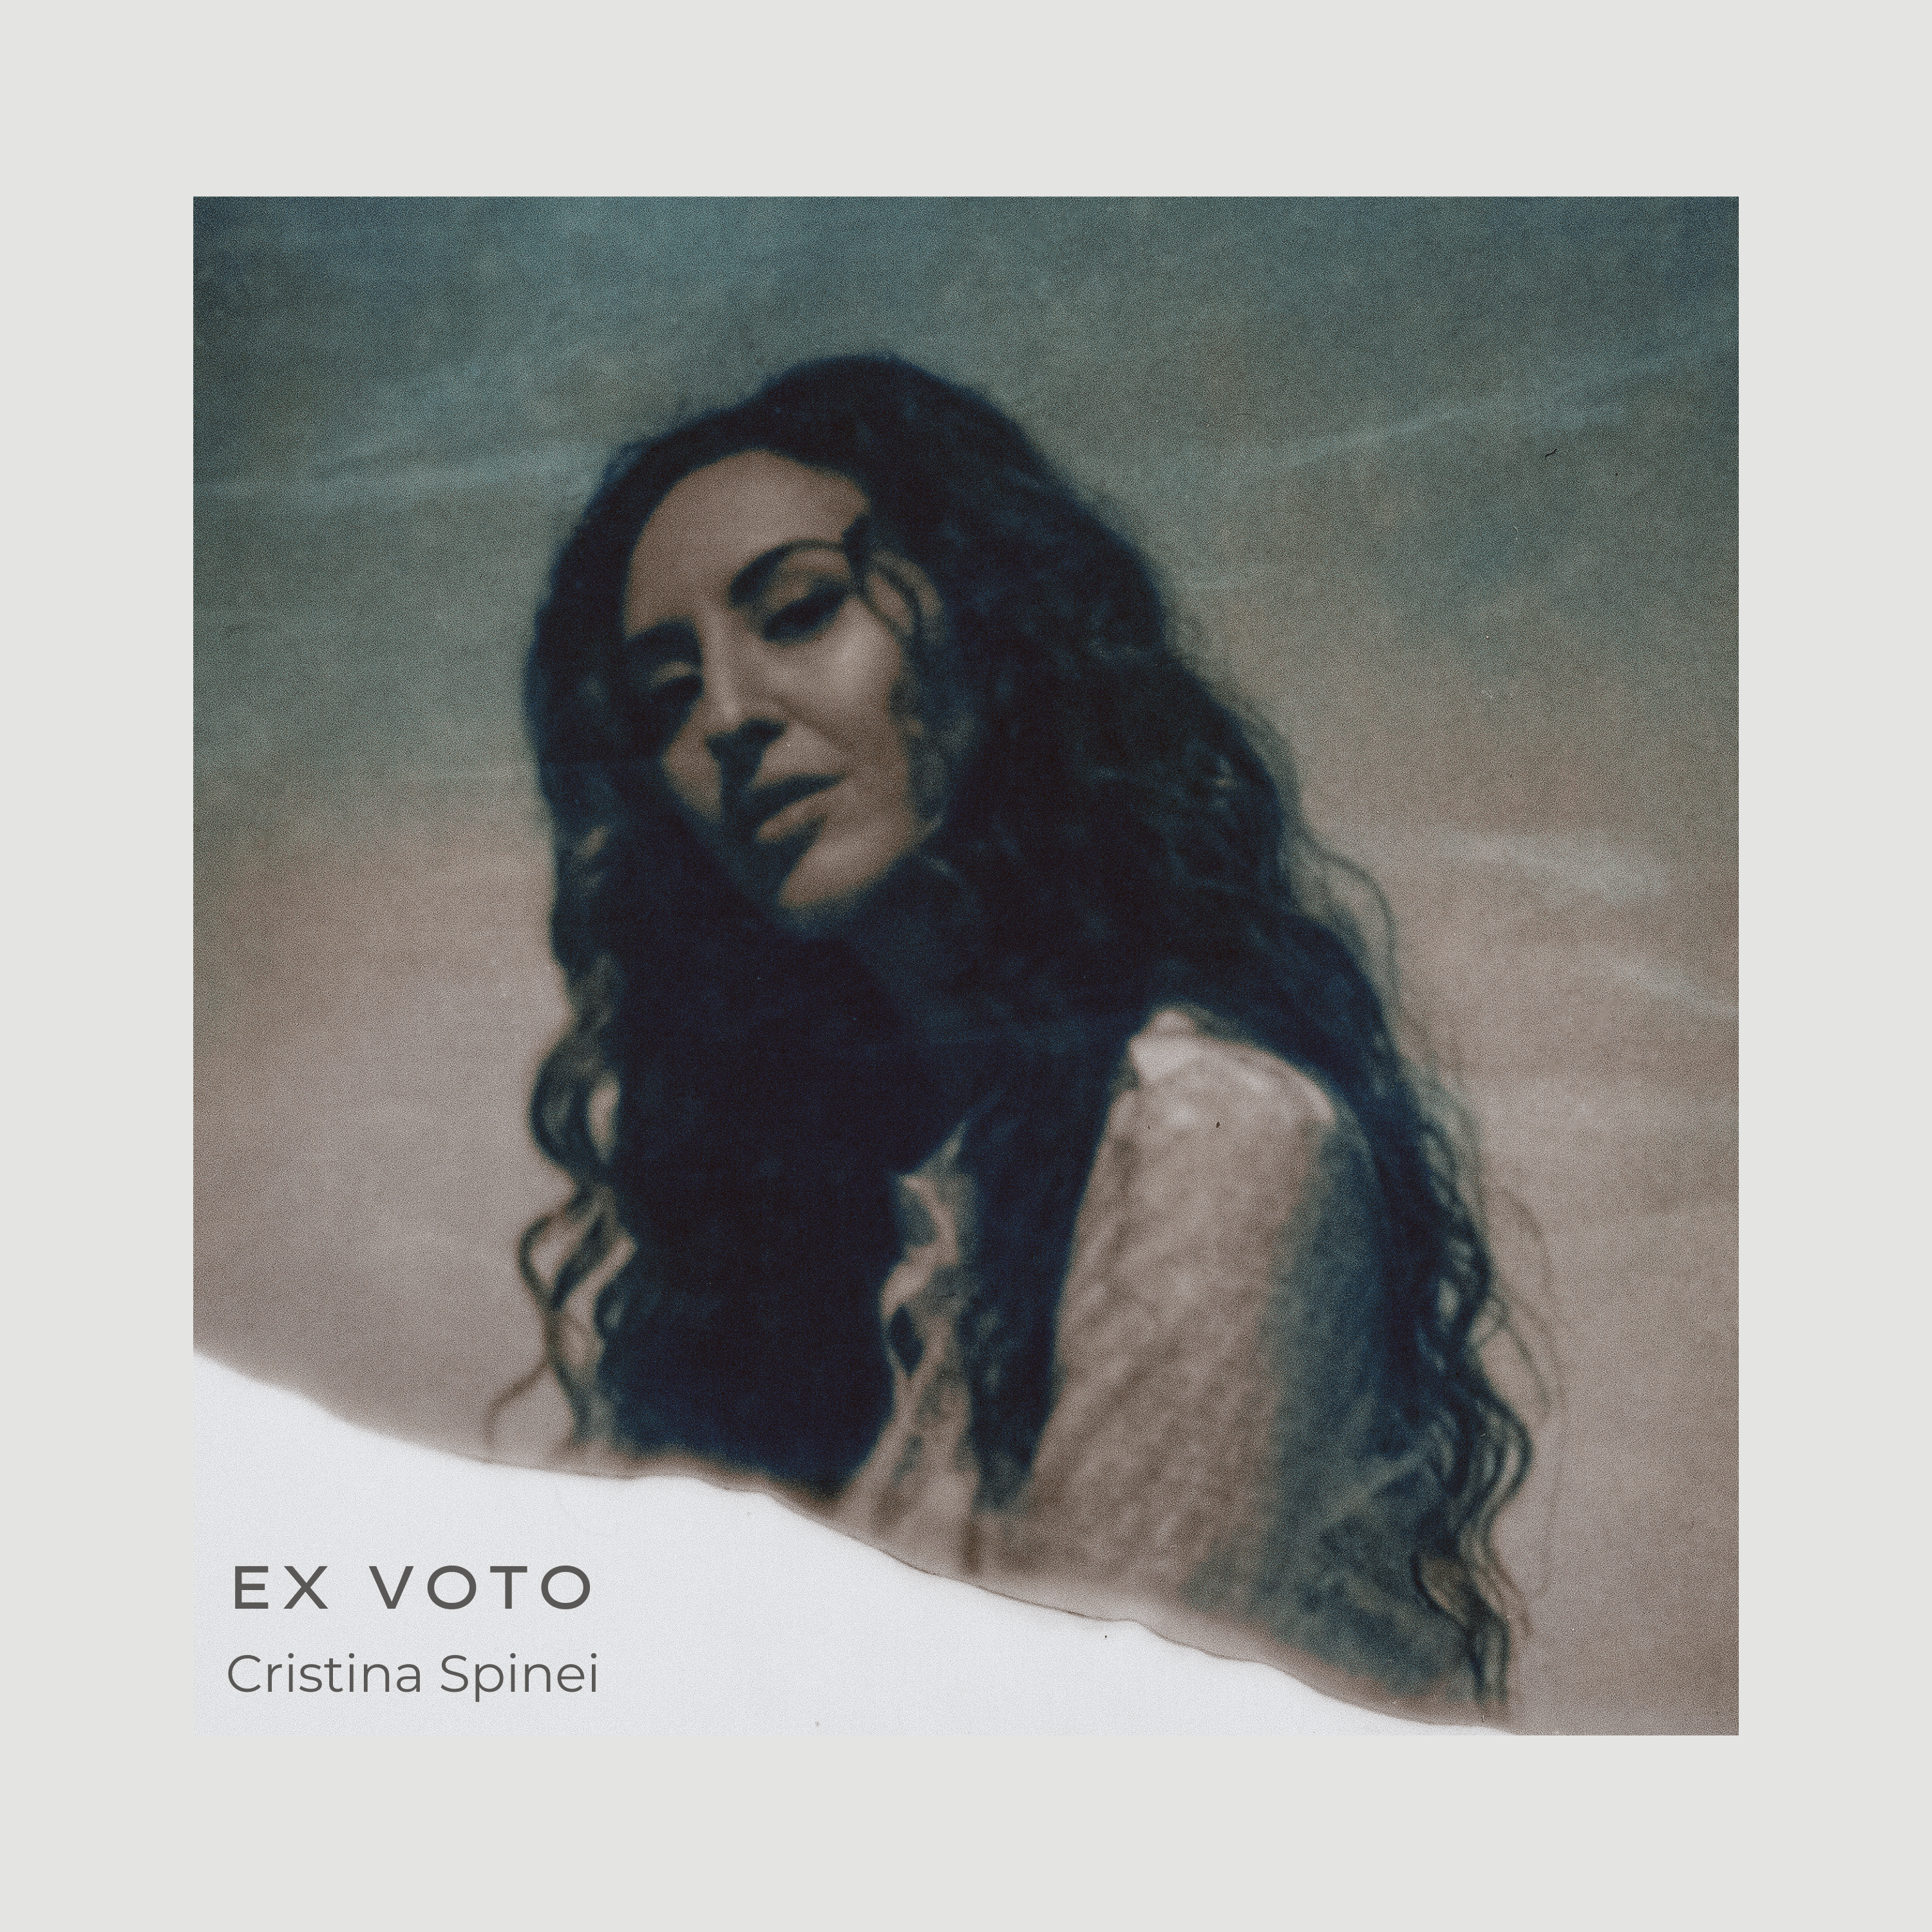 Cover art for Cristina Spinei's song: Ex Voto